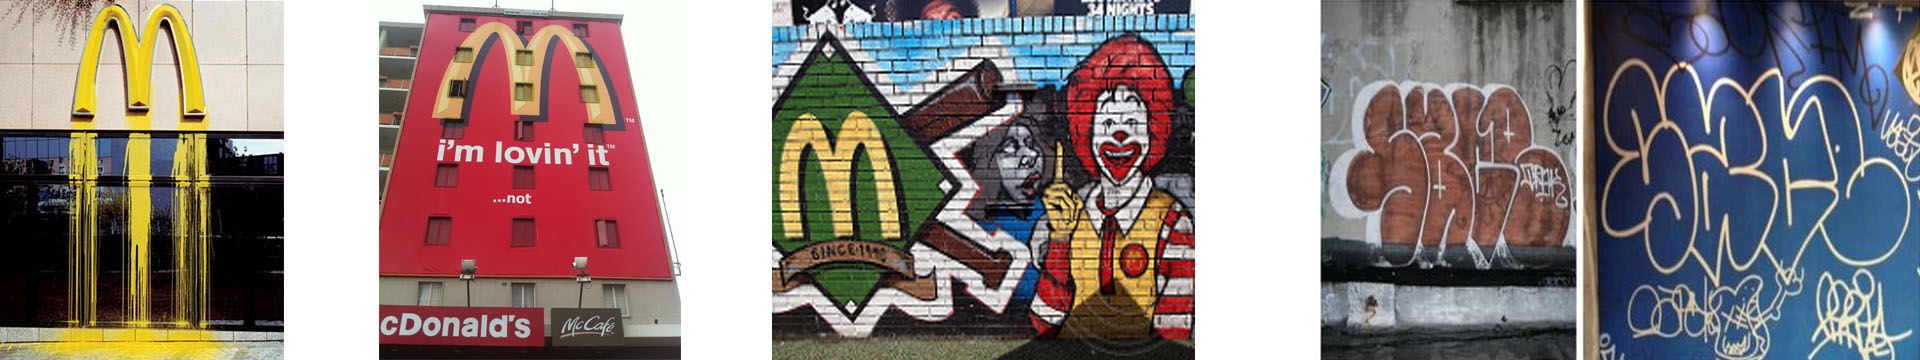 Blog McDonalds